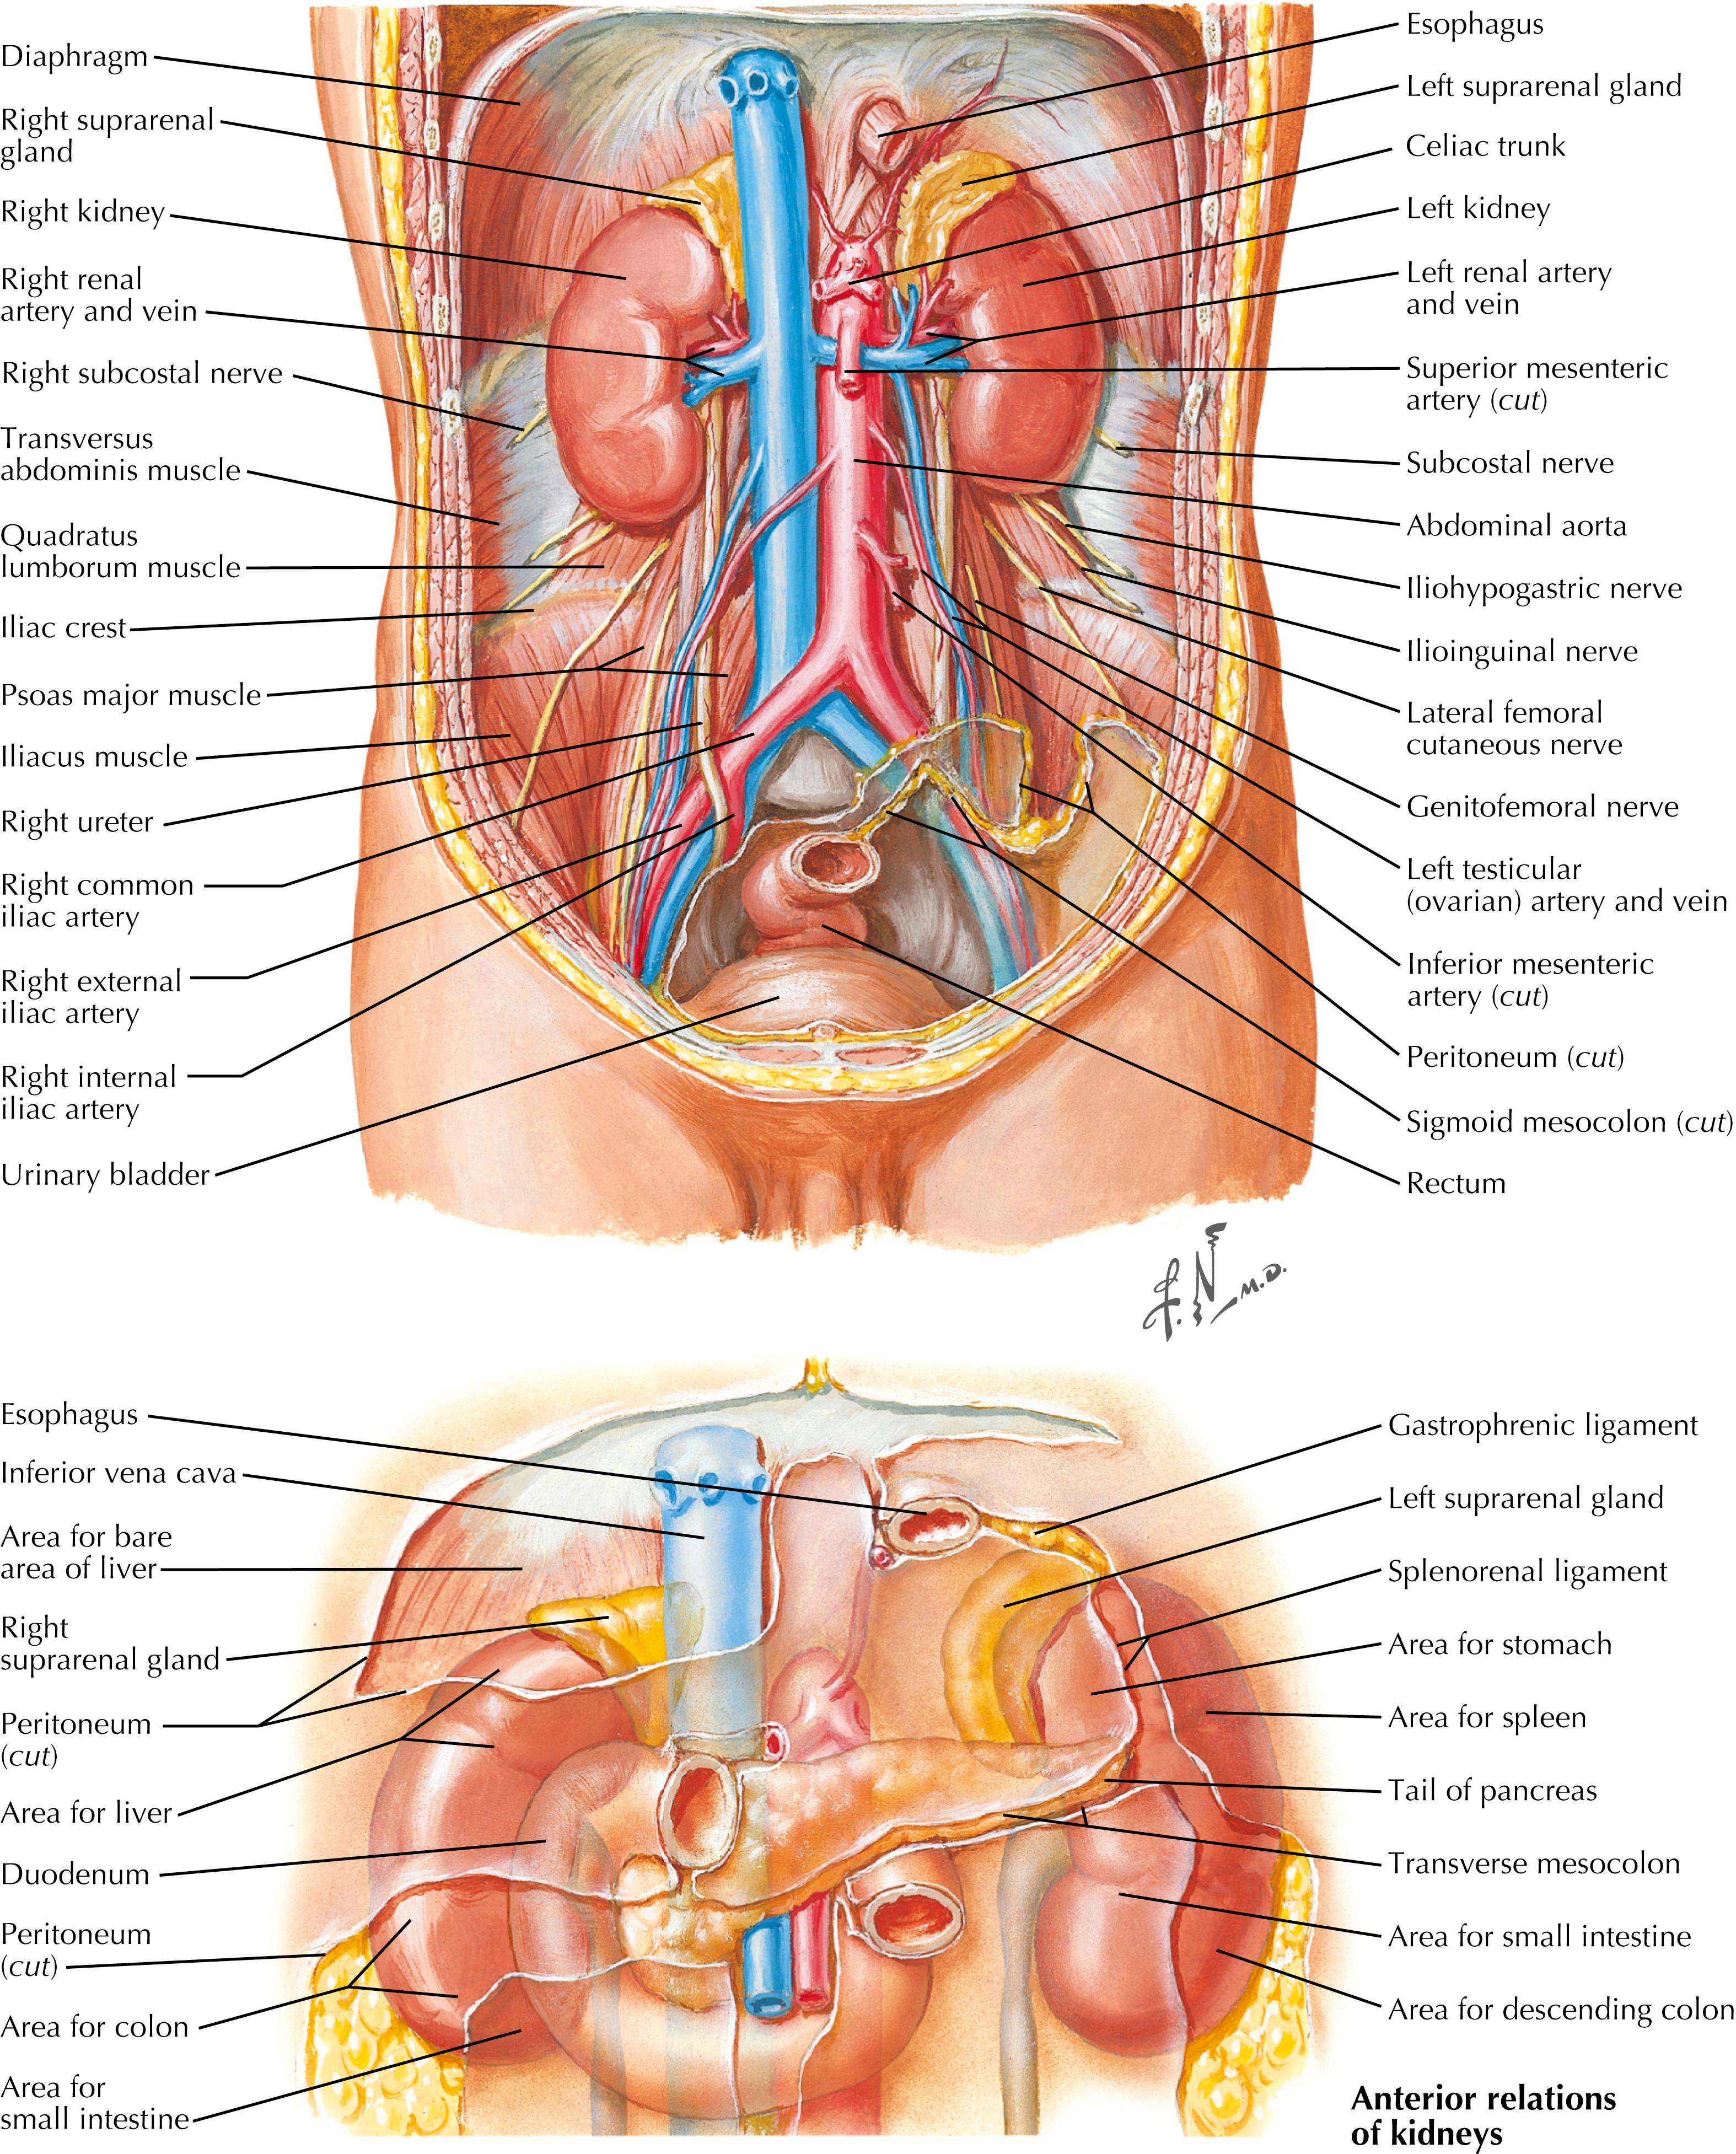 FIGURE 4.1, Adrenal glands in situ, anterior views.